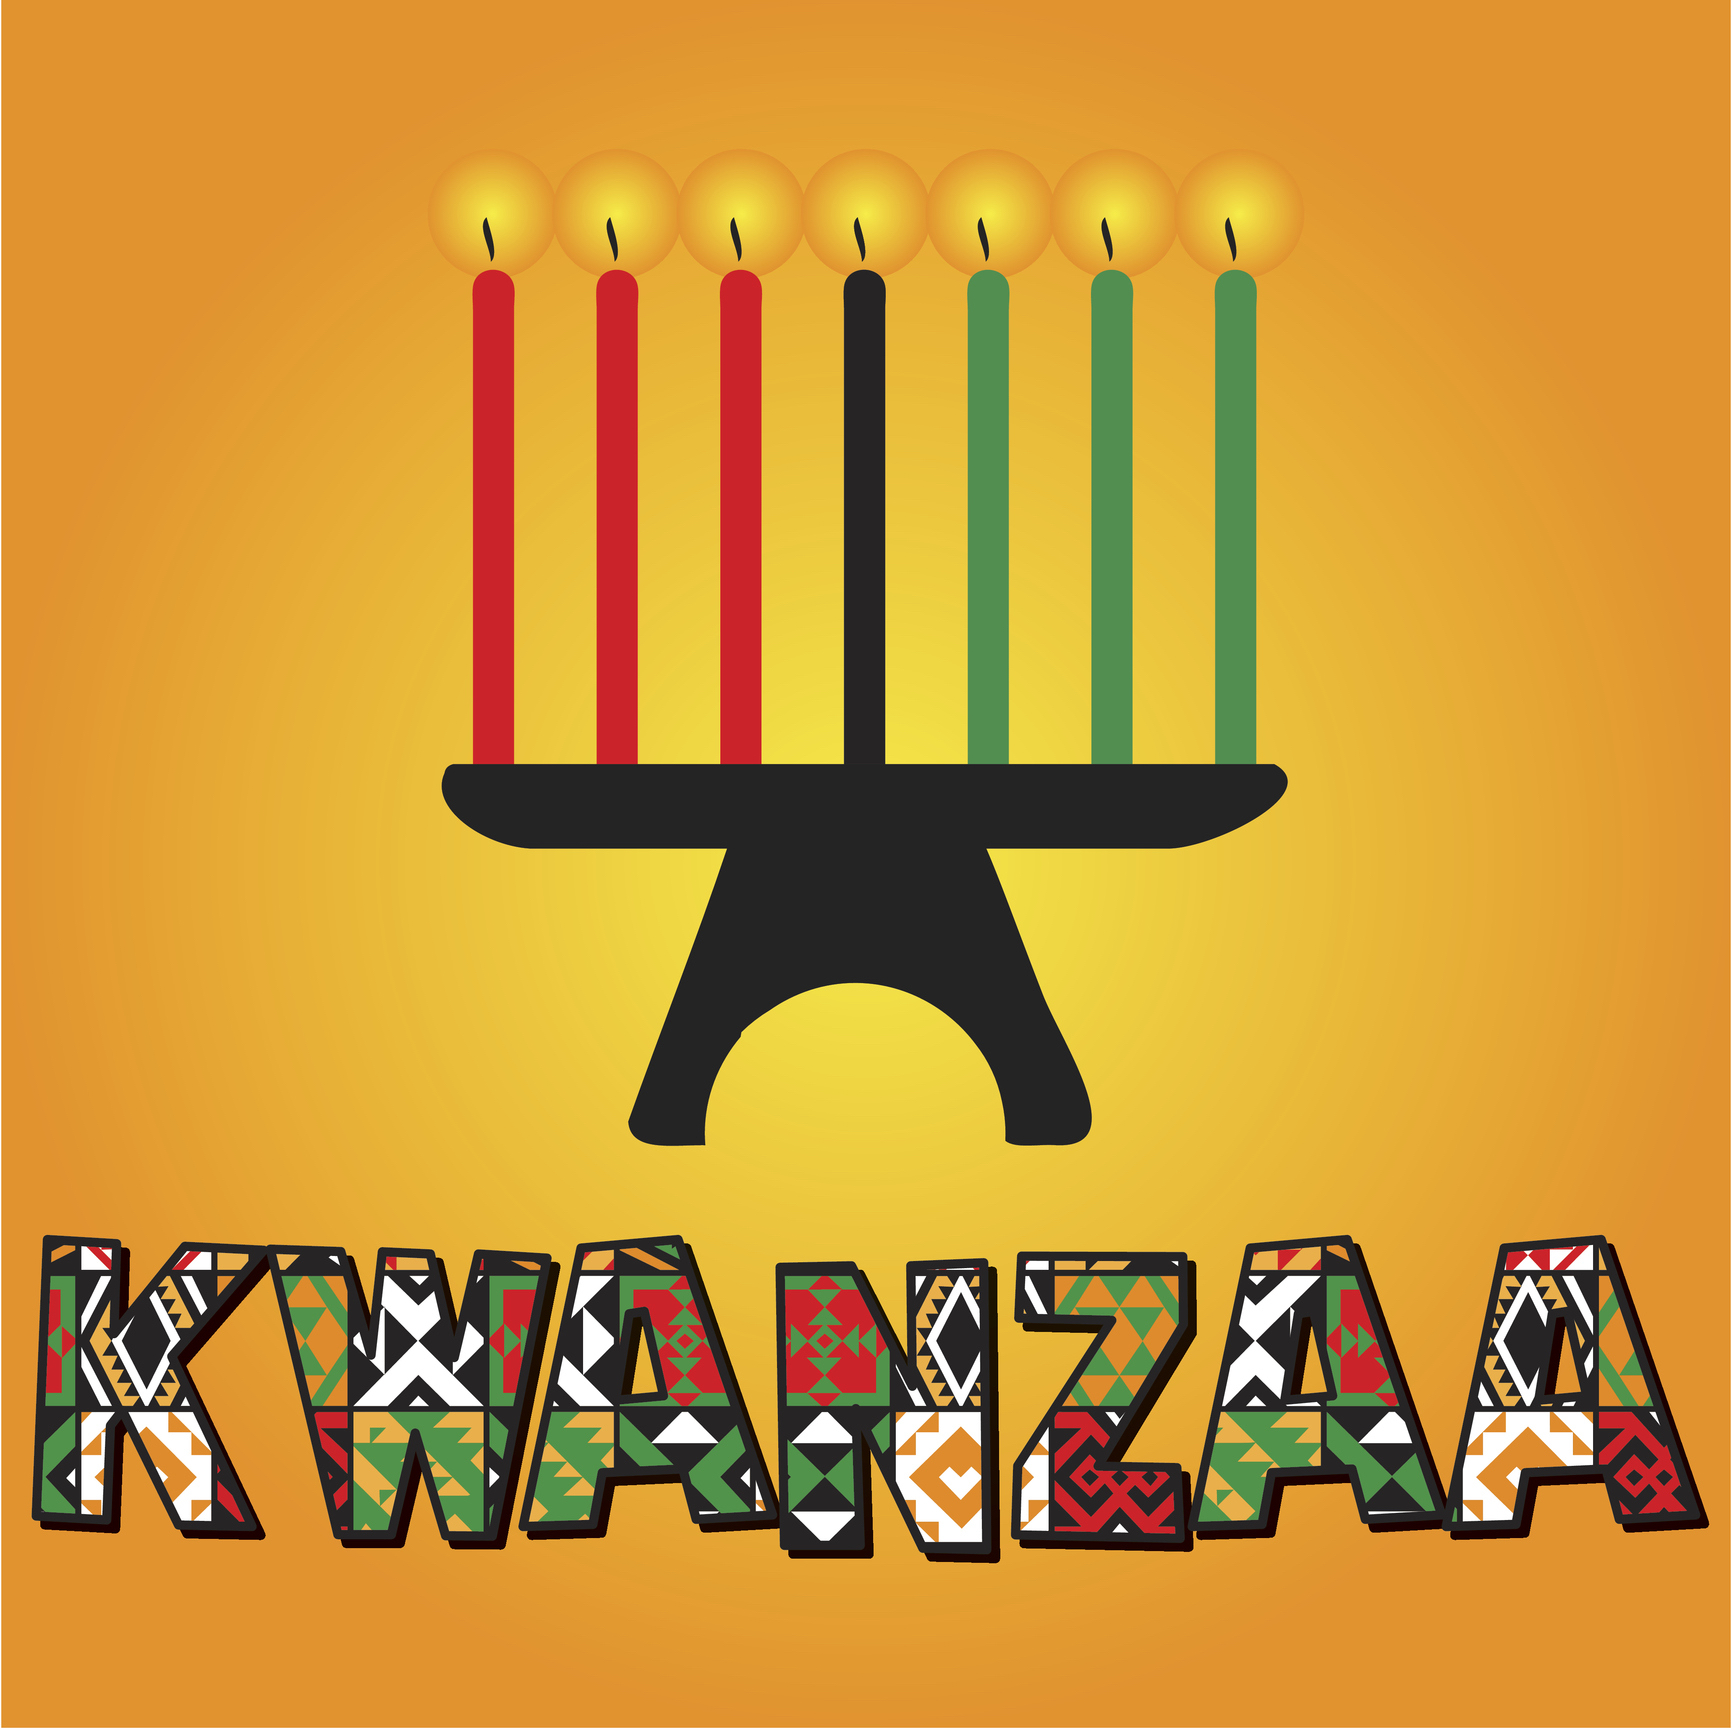 Greeting card for Kwanzaa